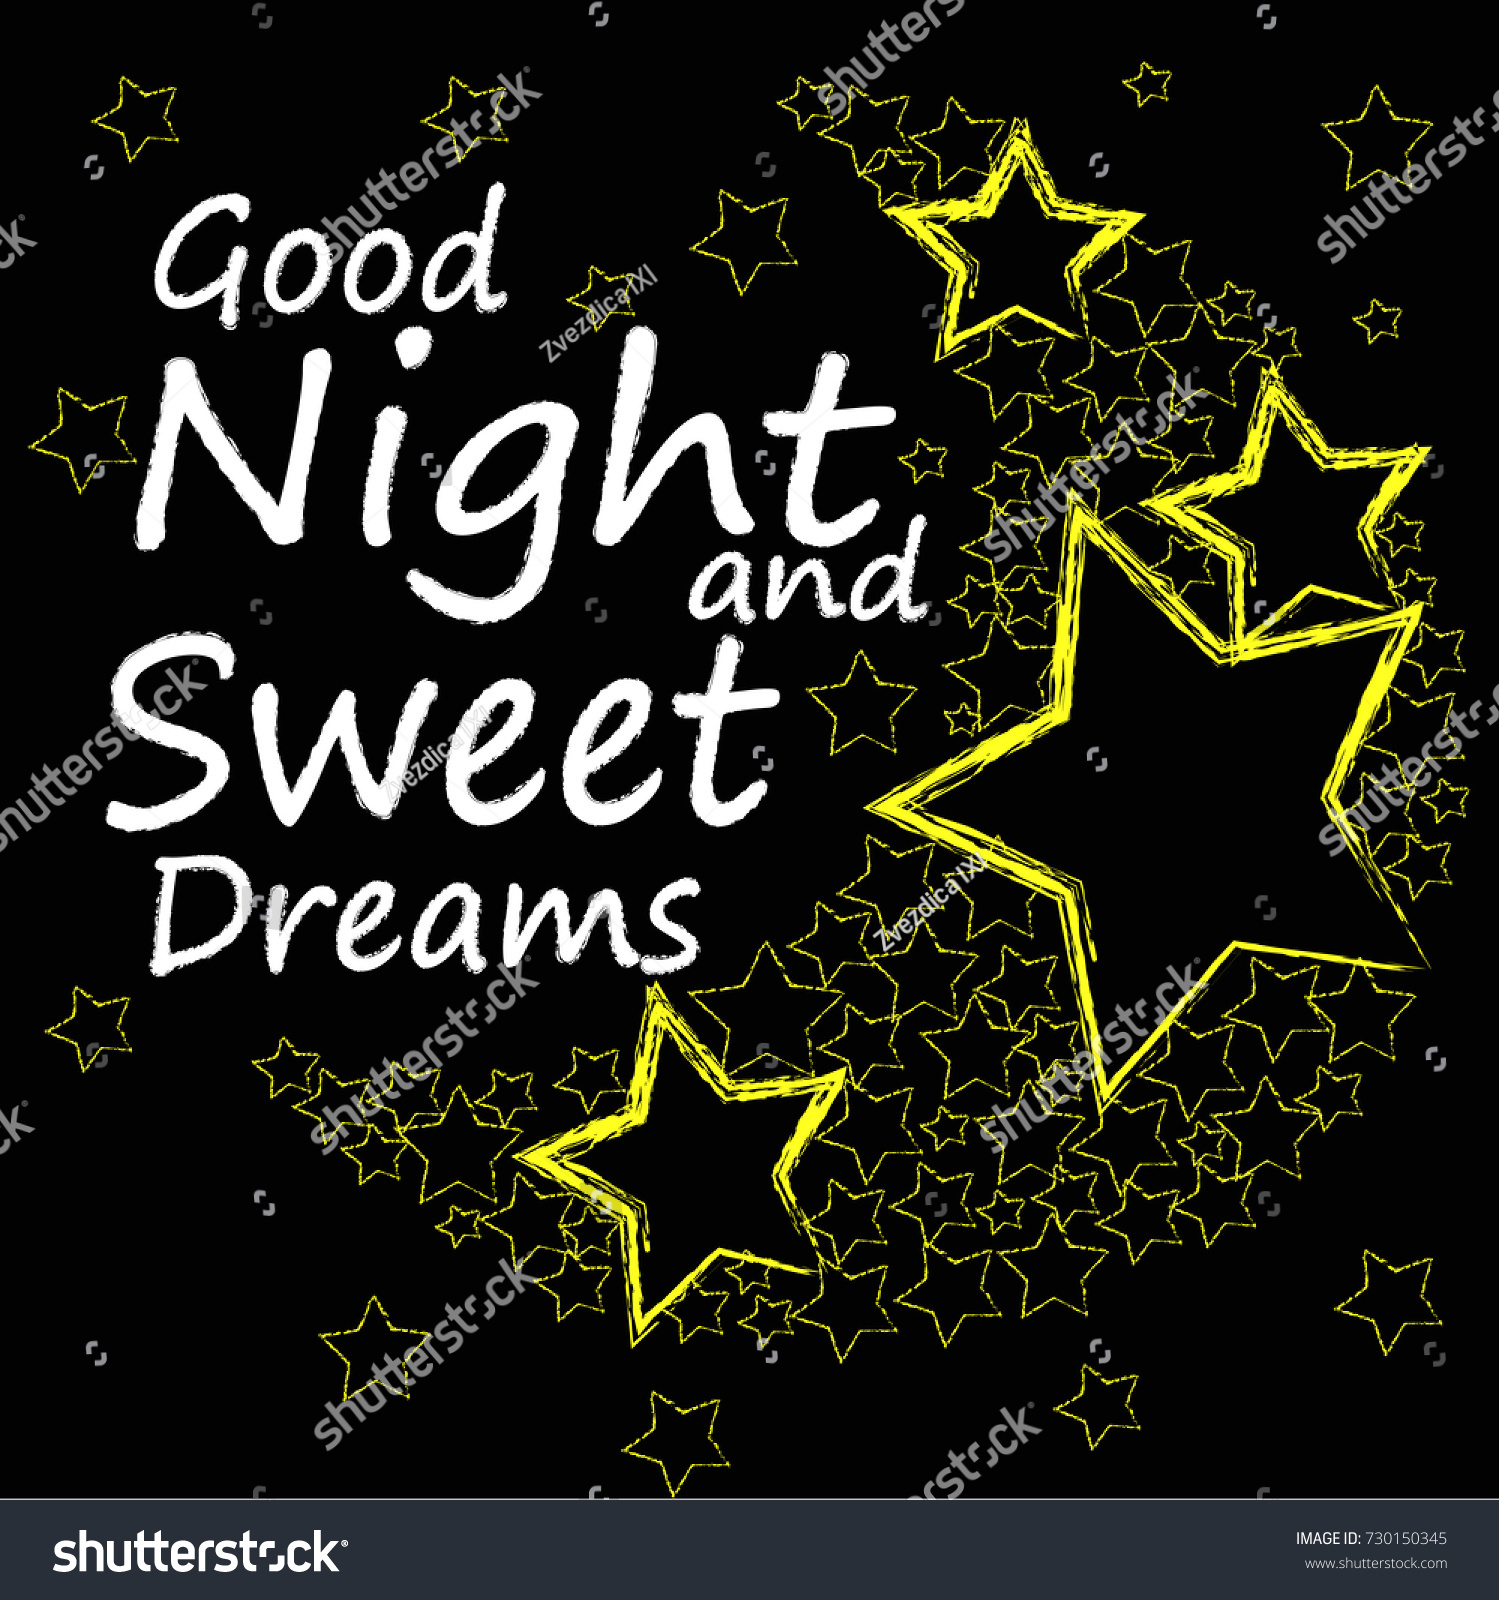 Good Night Sweet Dreams Moon Made Stock Vector (Royalty Free) 730150345 ...